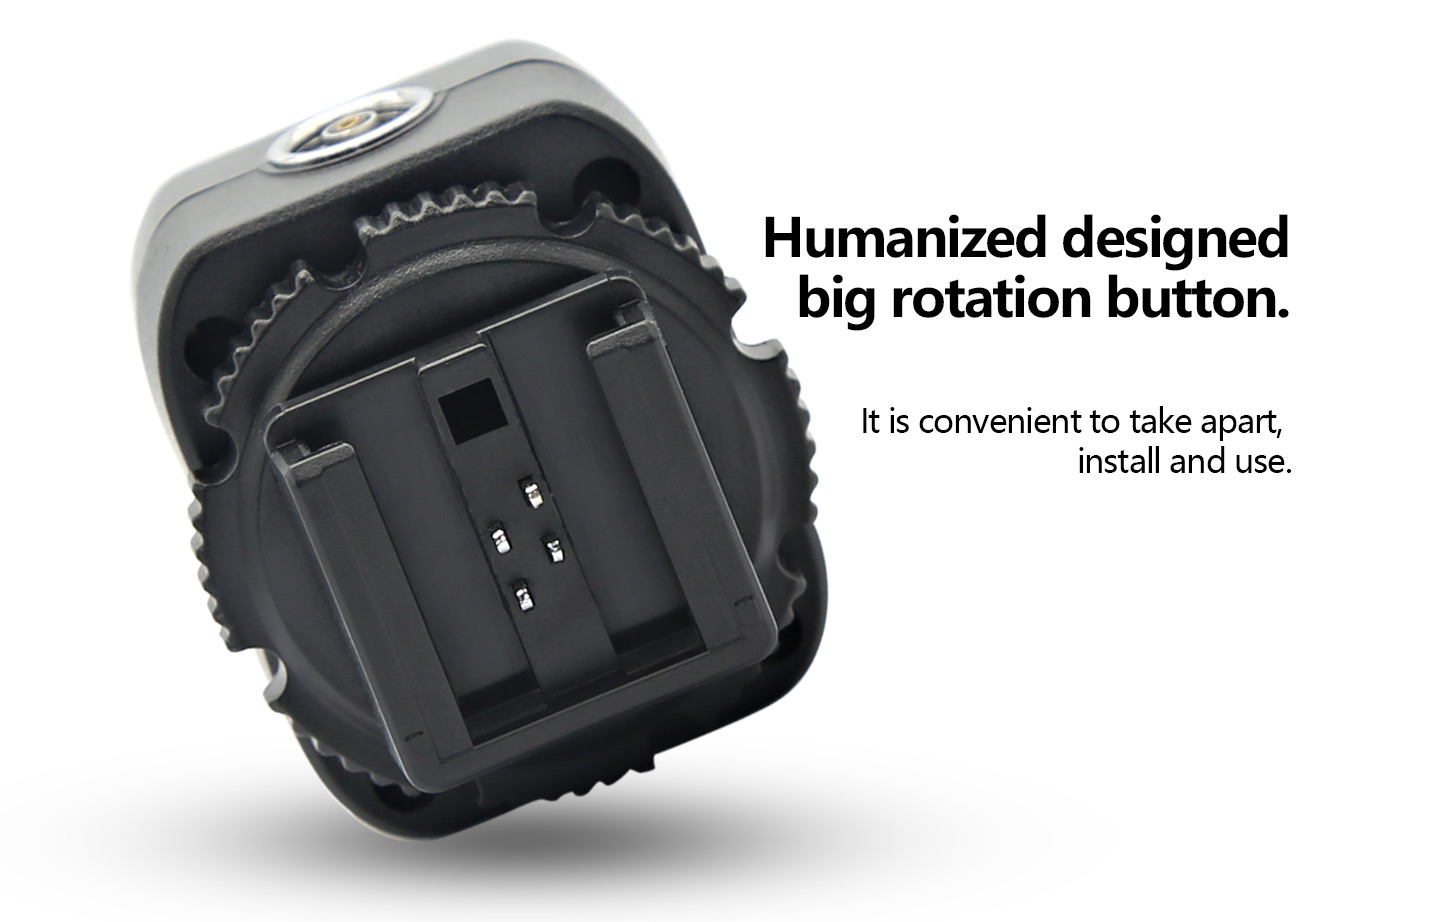 Humanized designed big rotation button